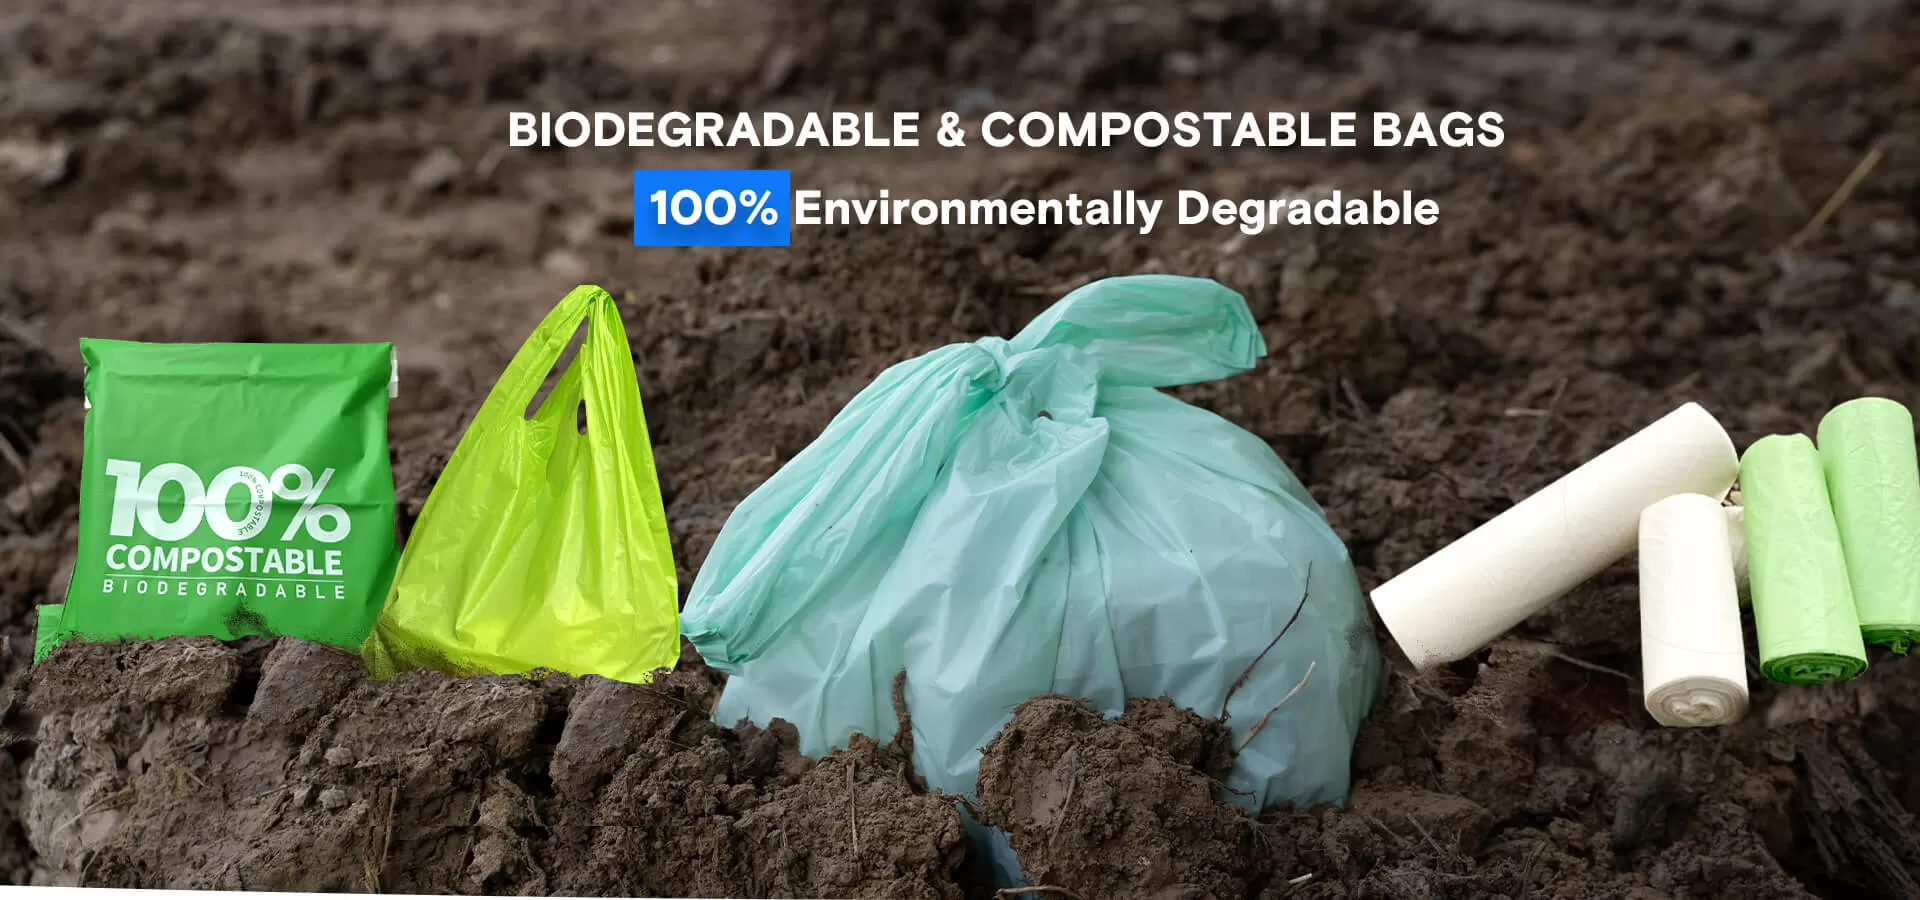 BIODEGRADABLE & COMPOSTABLE BAGS 100% Environmentally Degradable